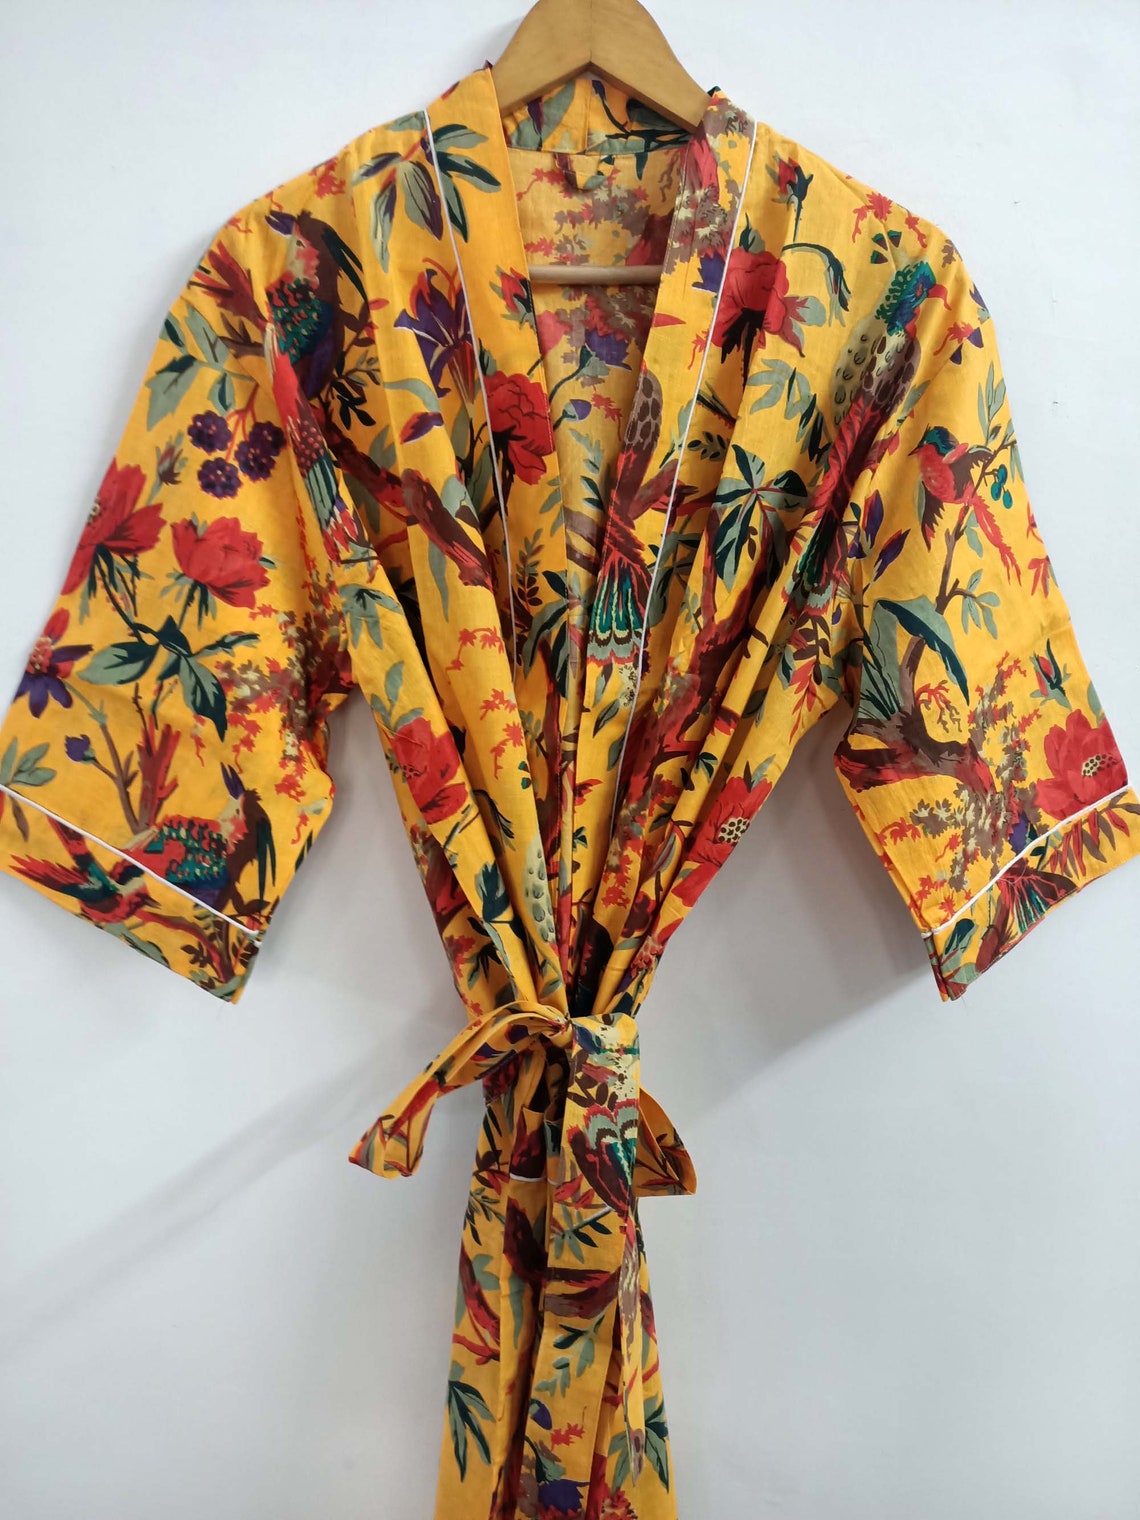 Cotton kimono Robes Floral print Kimono Soft and comfortable | Etsy